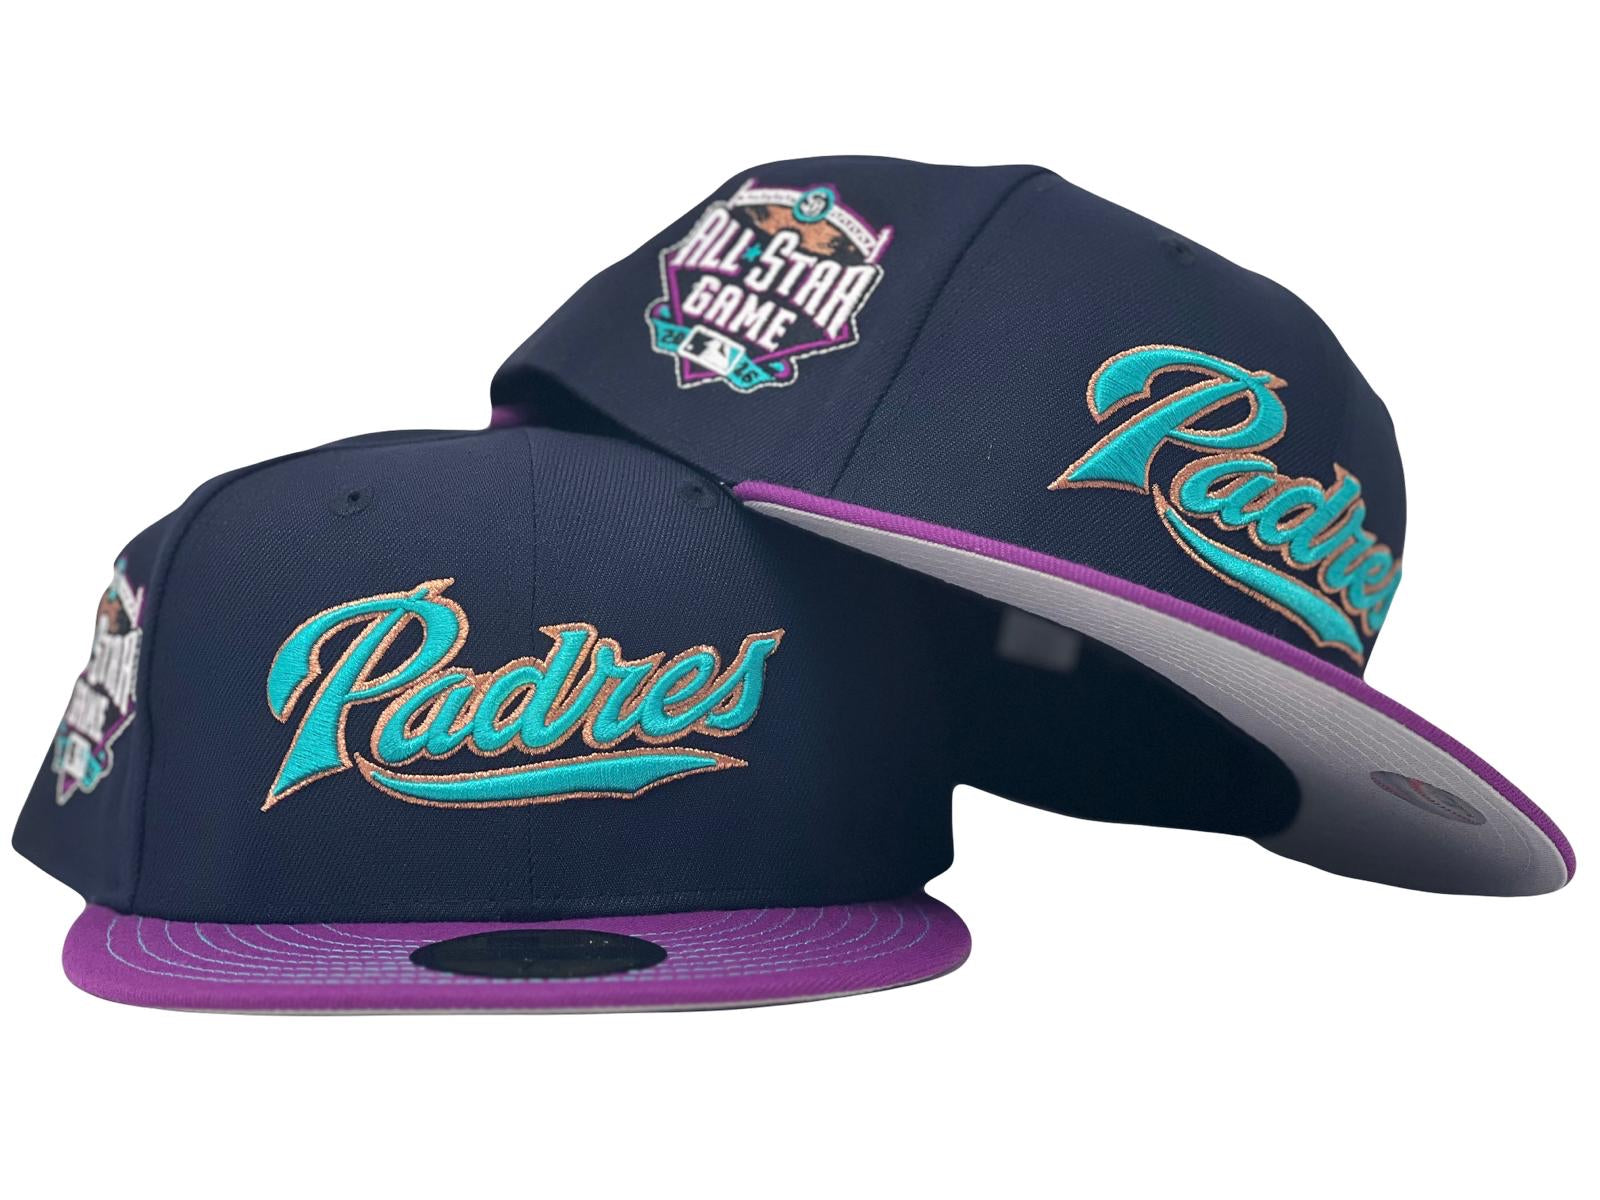 San Diego Padres Stitch Baseball Jersey -  Worldwide Shipping